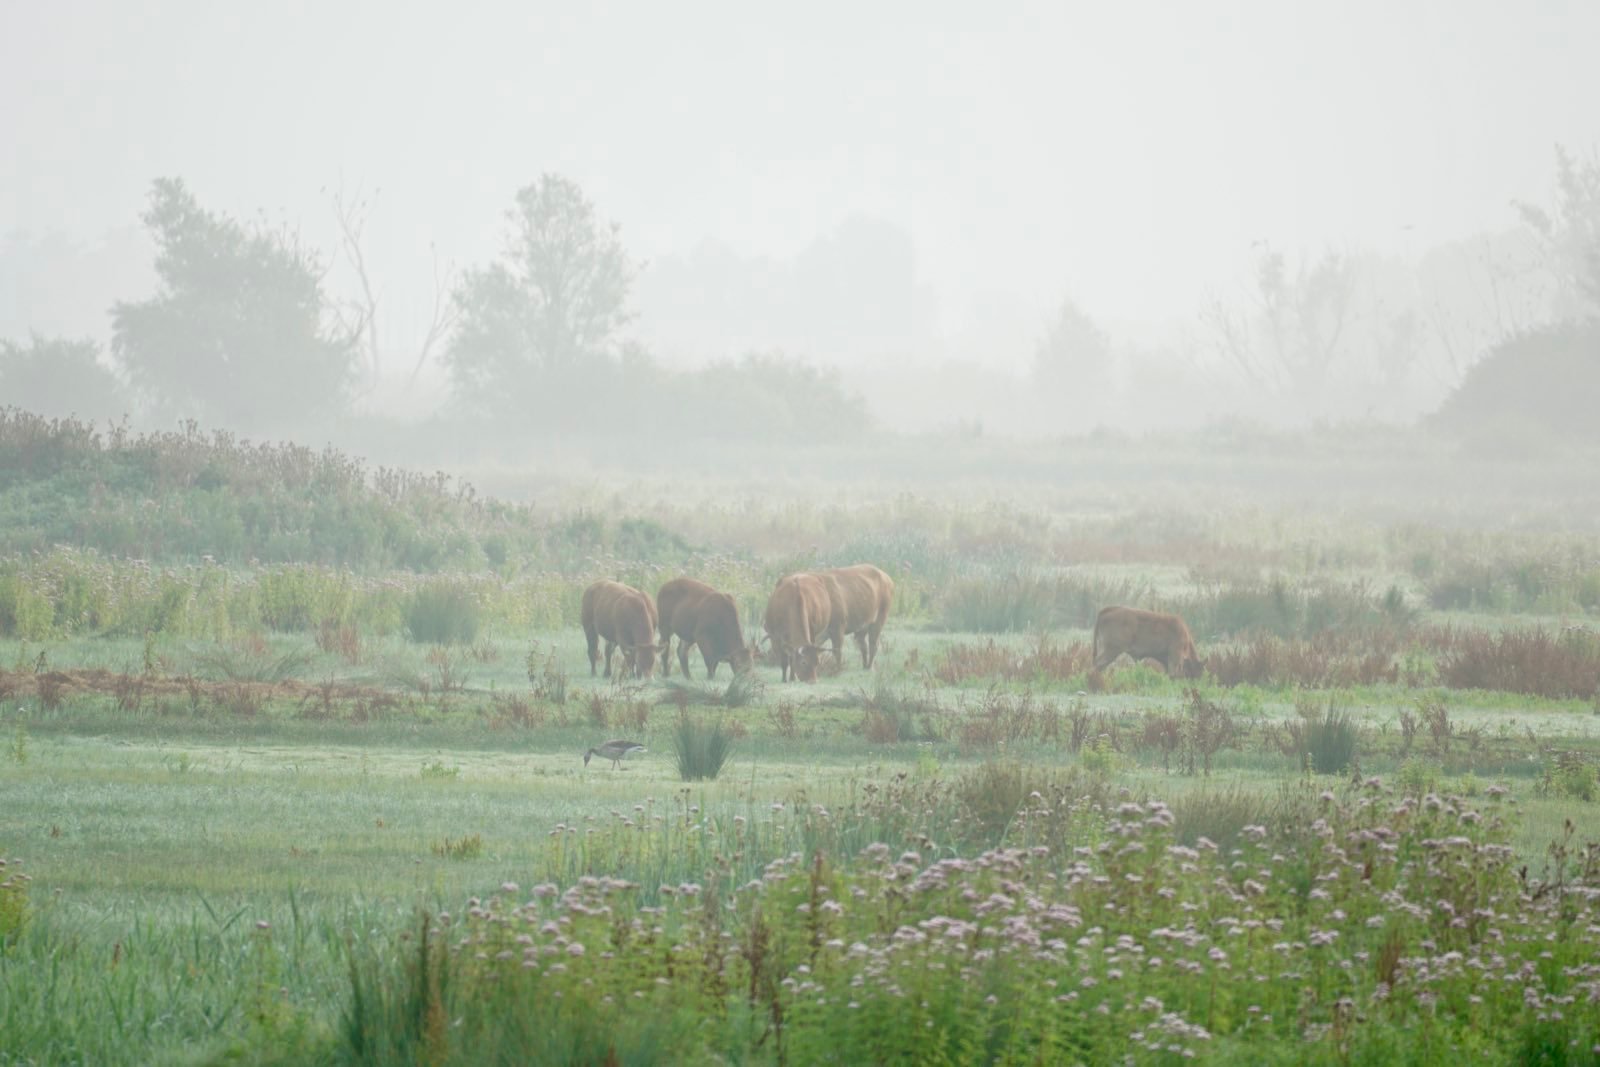 A couple brown cows and their calves seen grazing through the mist.